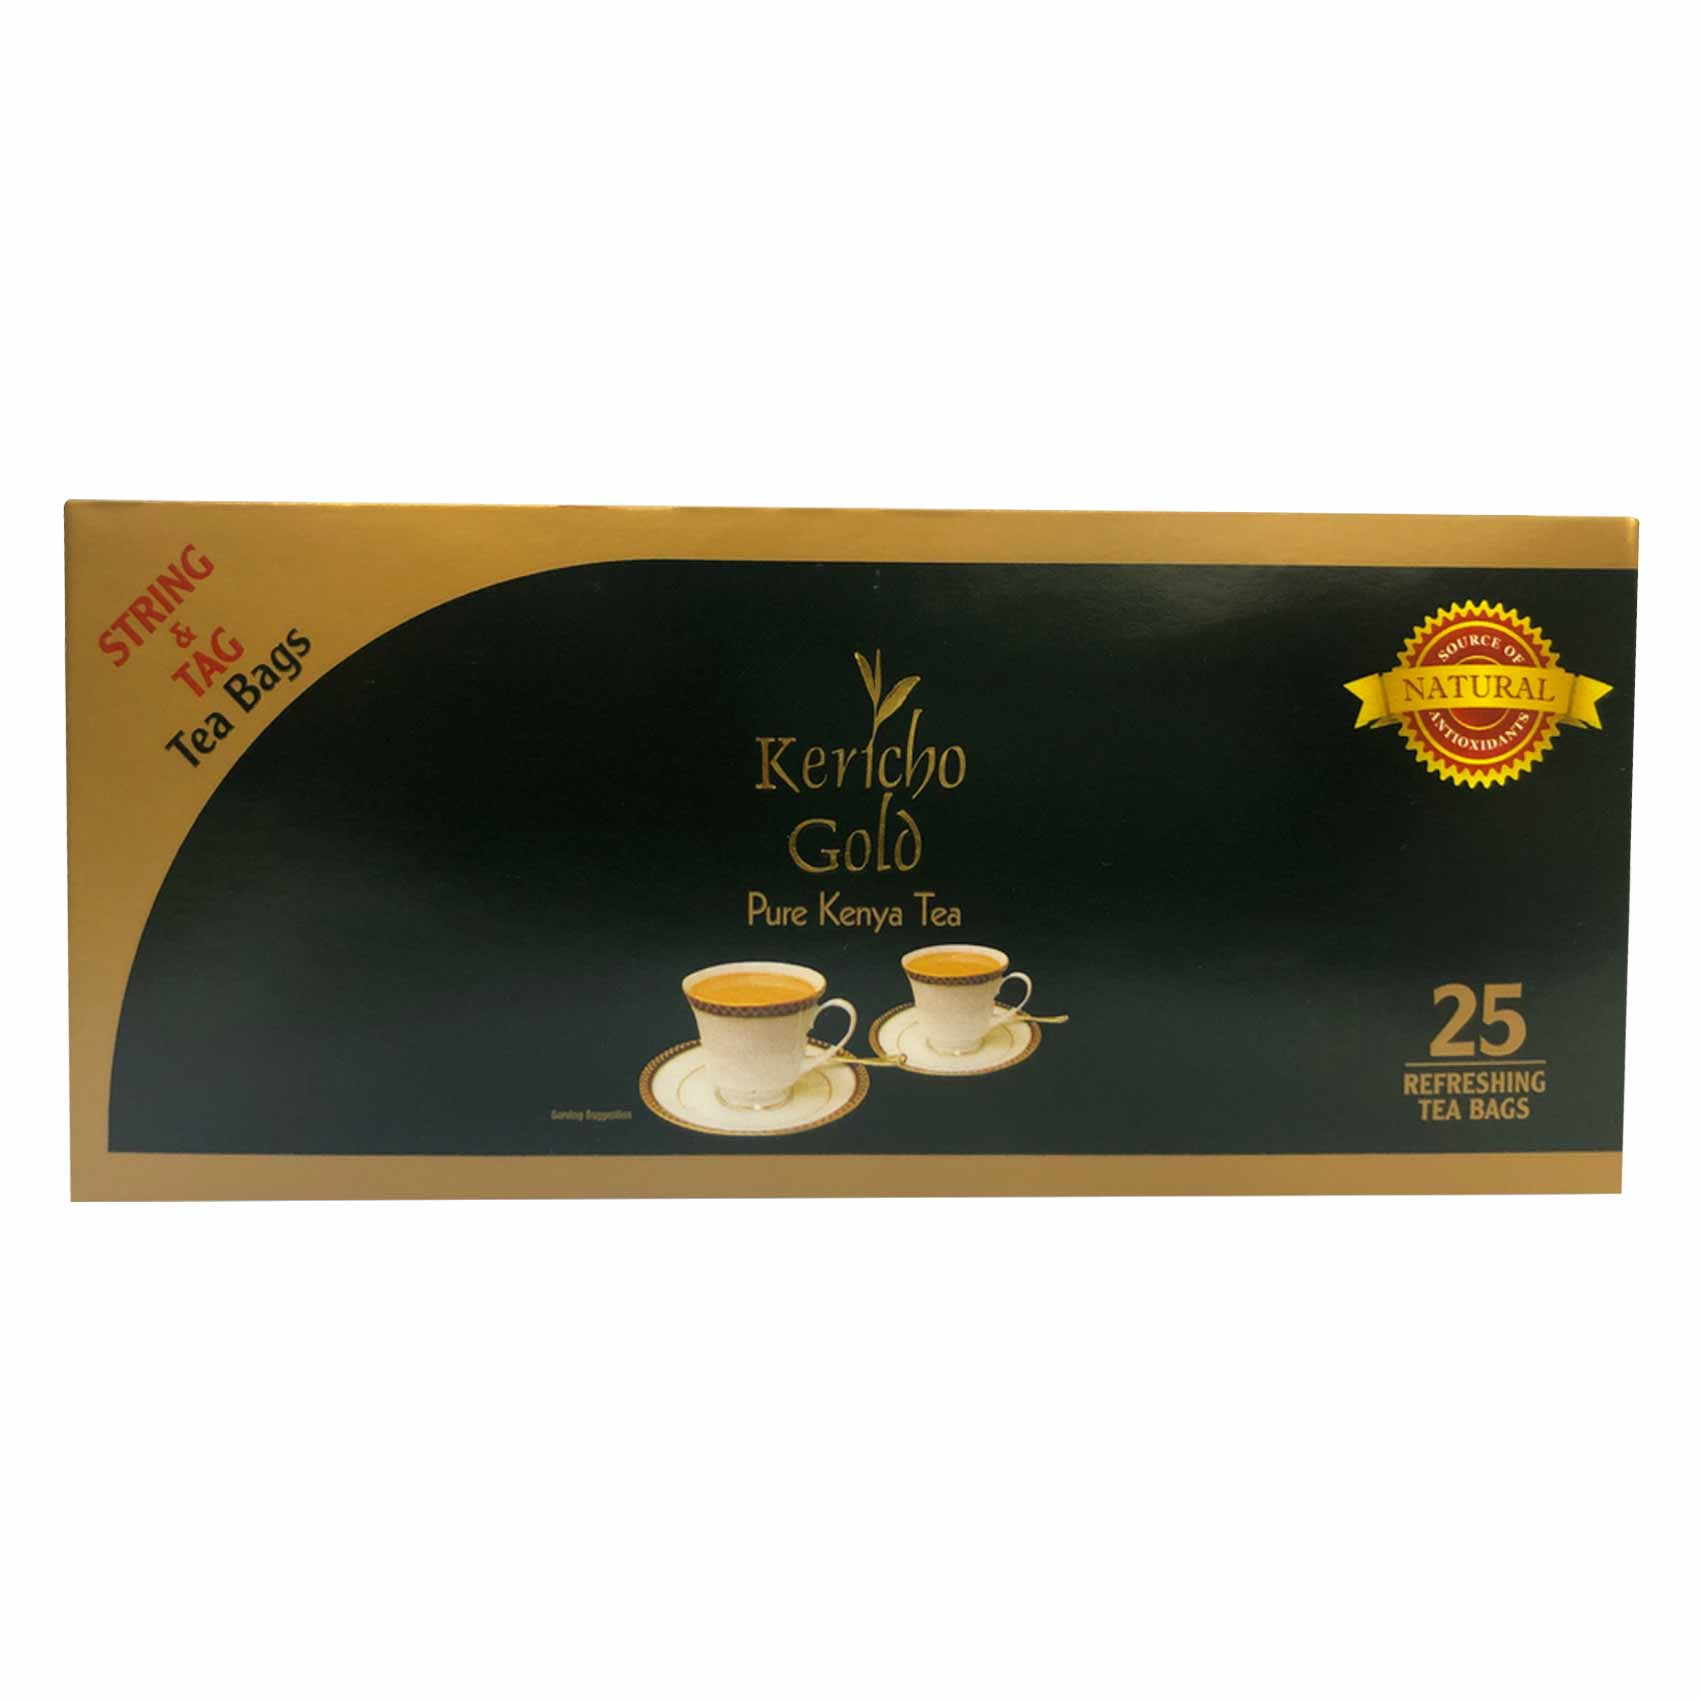 Kericho Gold Pure Kenya String Tea Bags 2g x Pack of 25